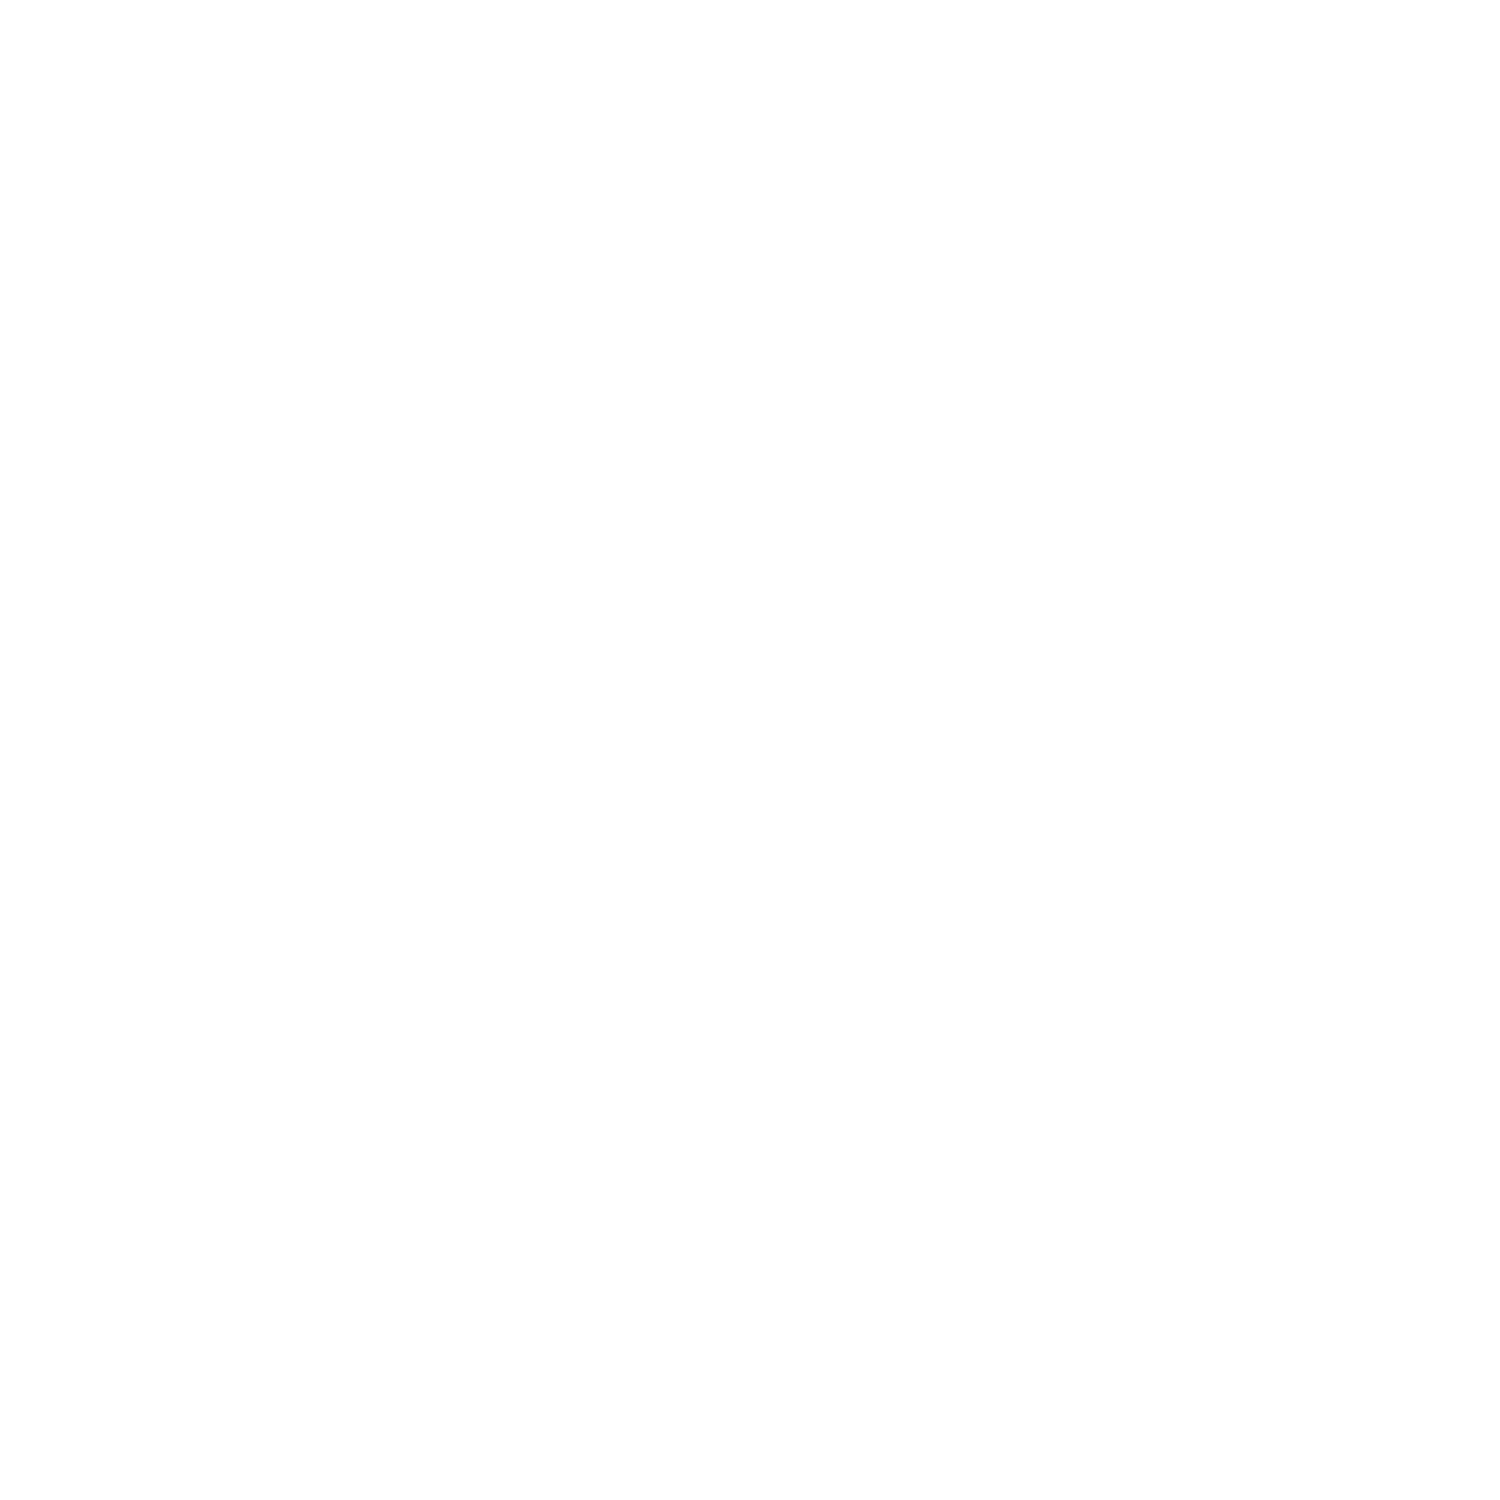 La Bicycletterie Figeac